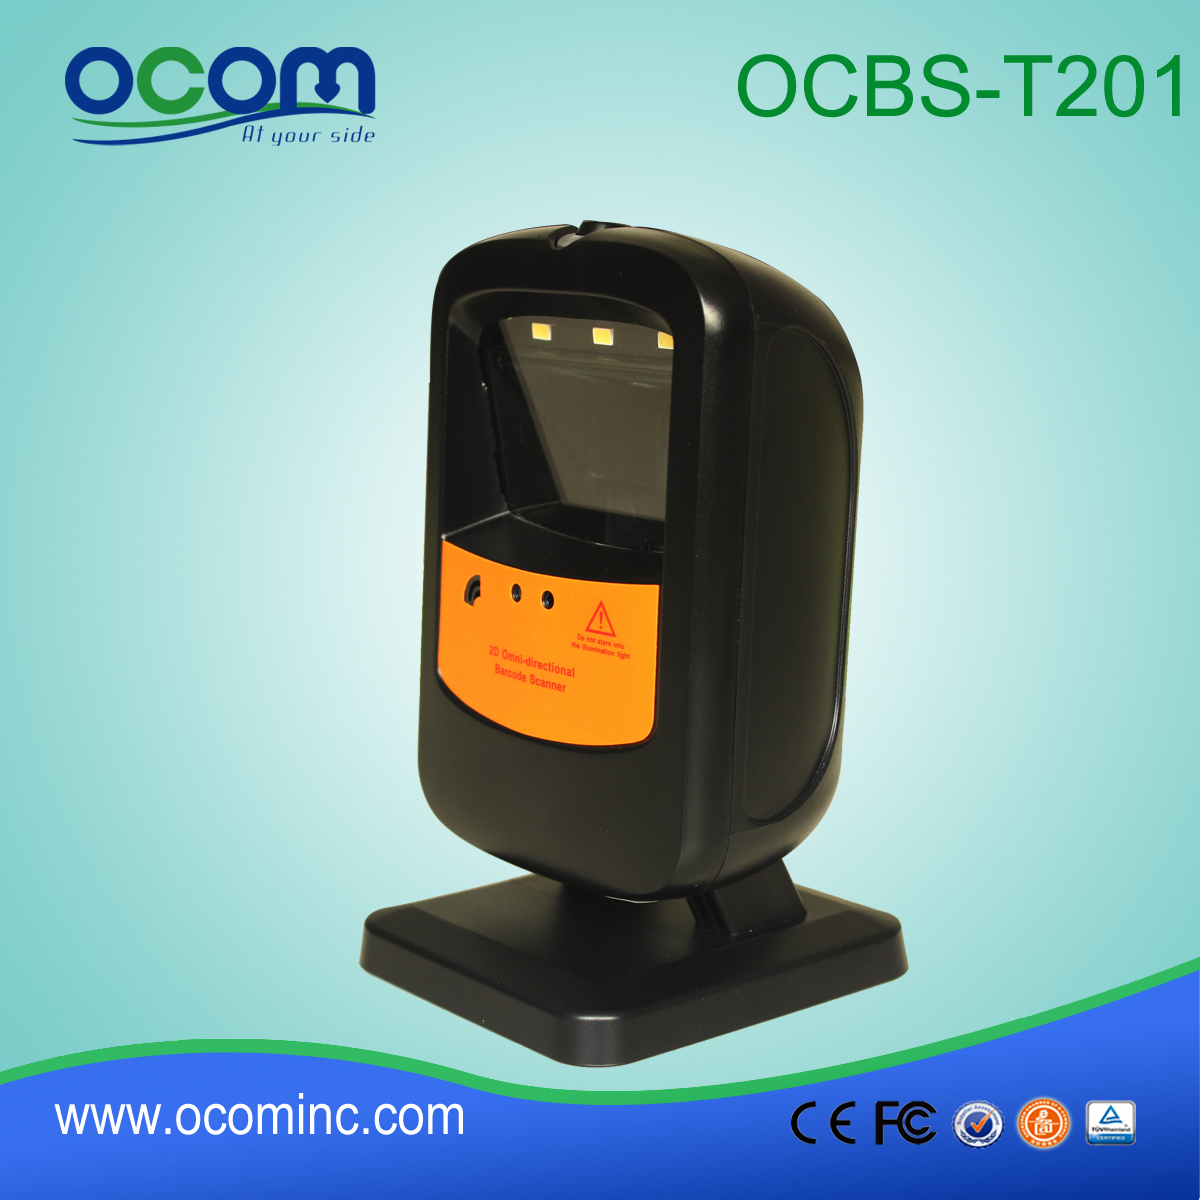 OCBS-T201 Widoczne 2D Barcode Scanner USB dla Cash Register